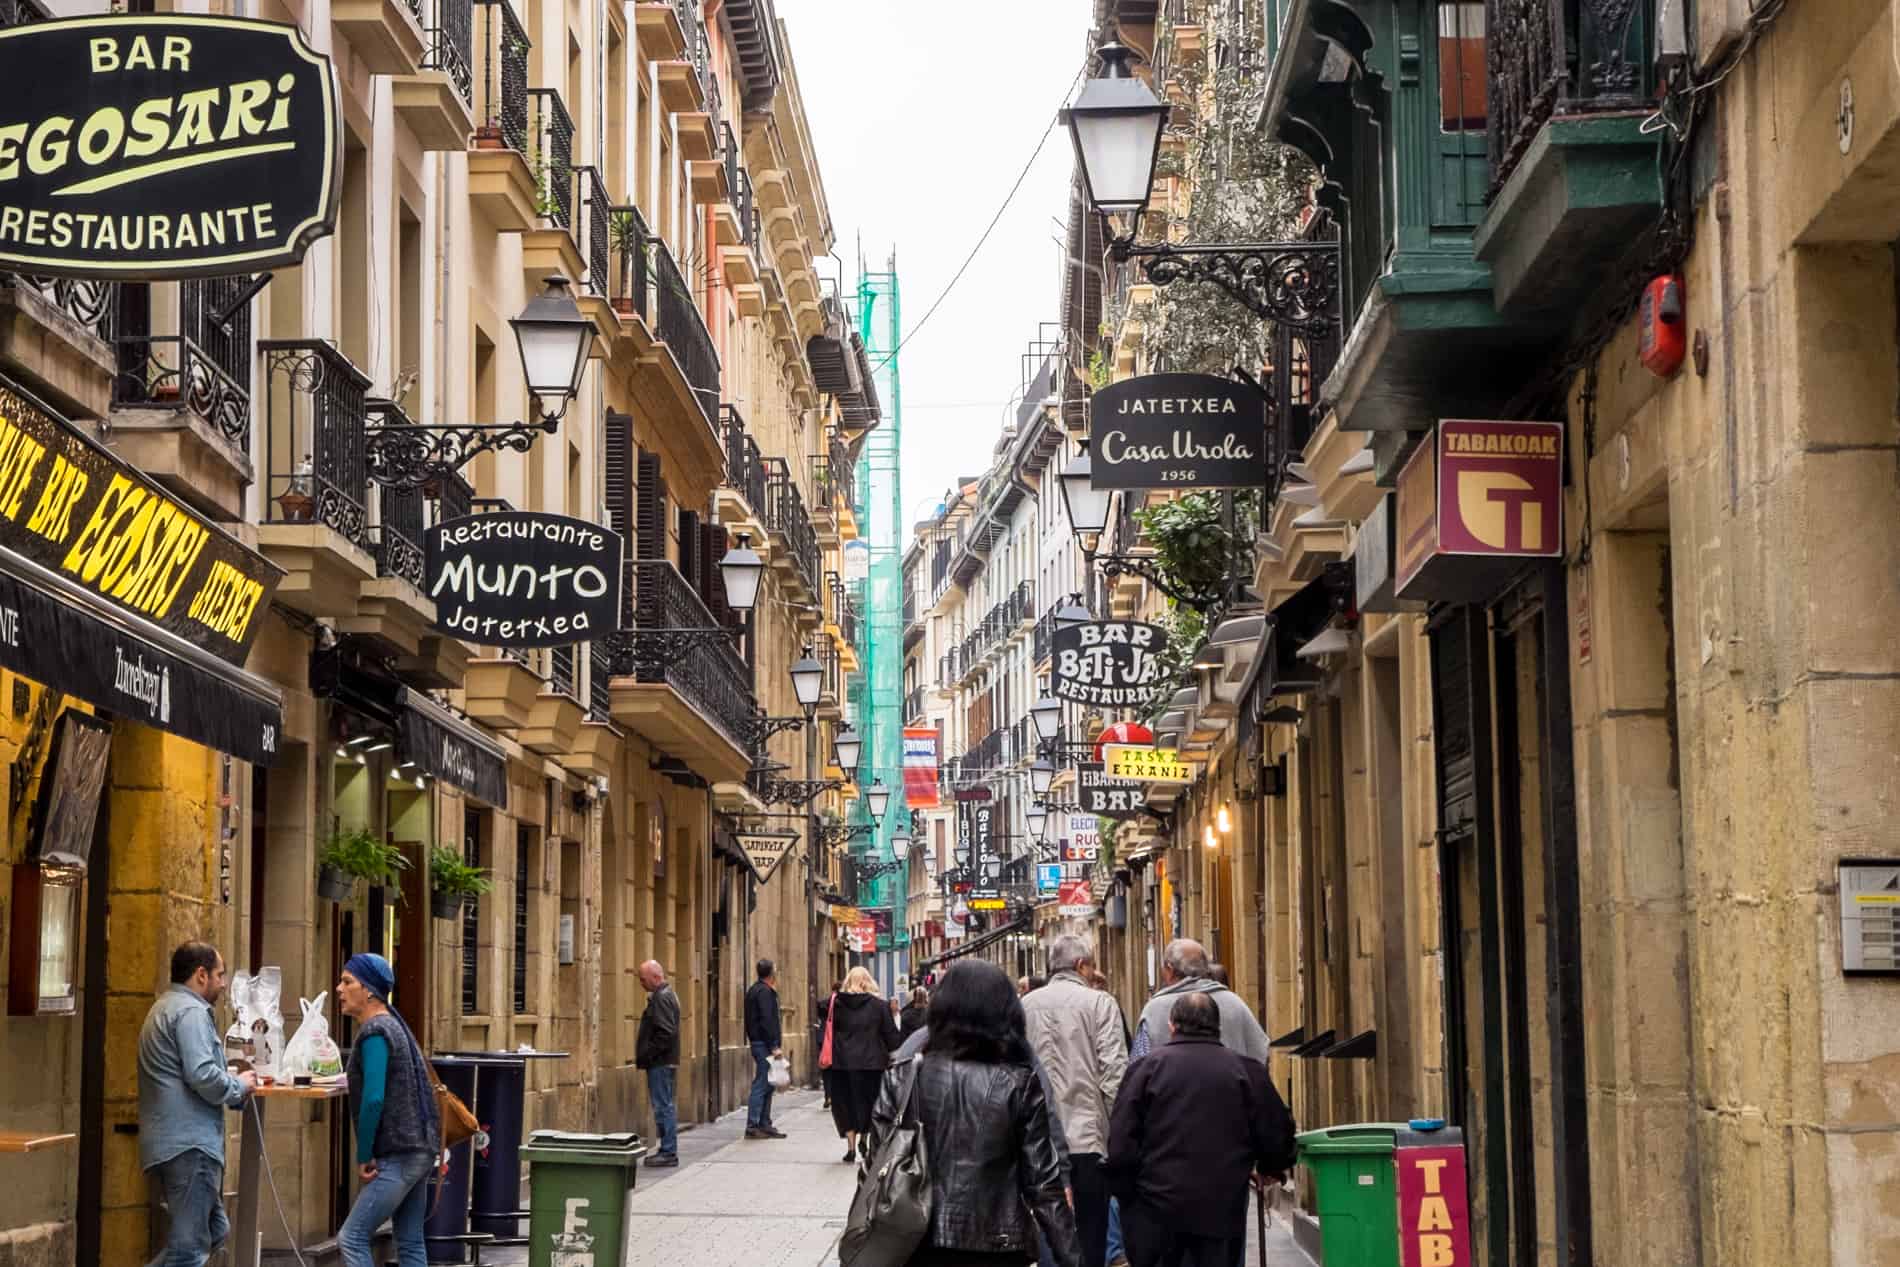 People walking down Fermin Calbeton Street - San Sebastian's food street lined with restaurant and Pintxos bar signs.